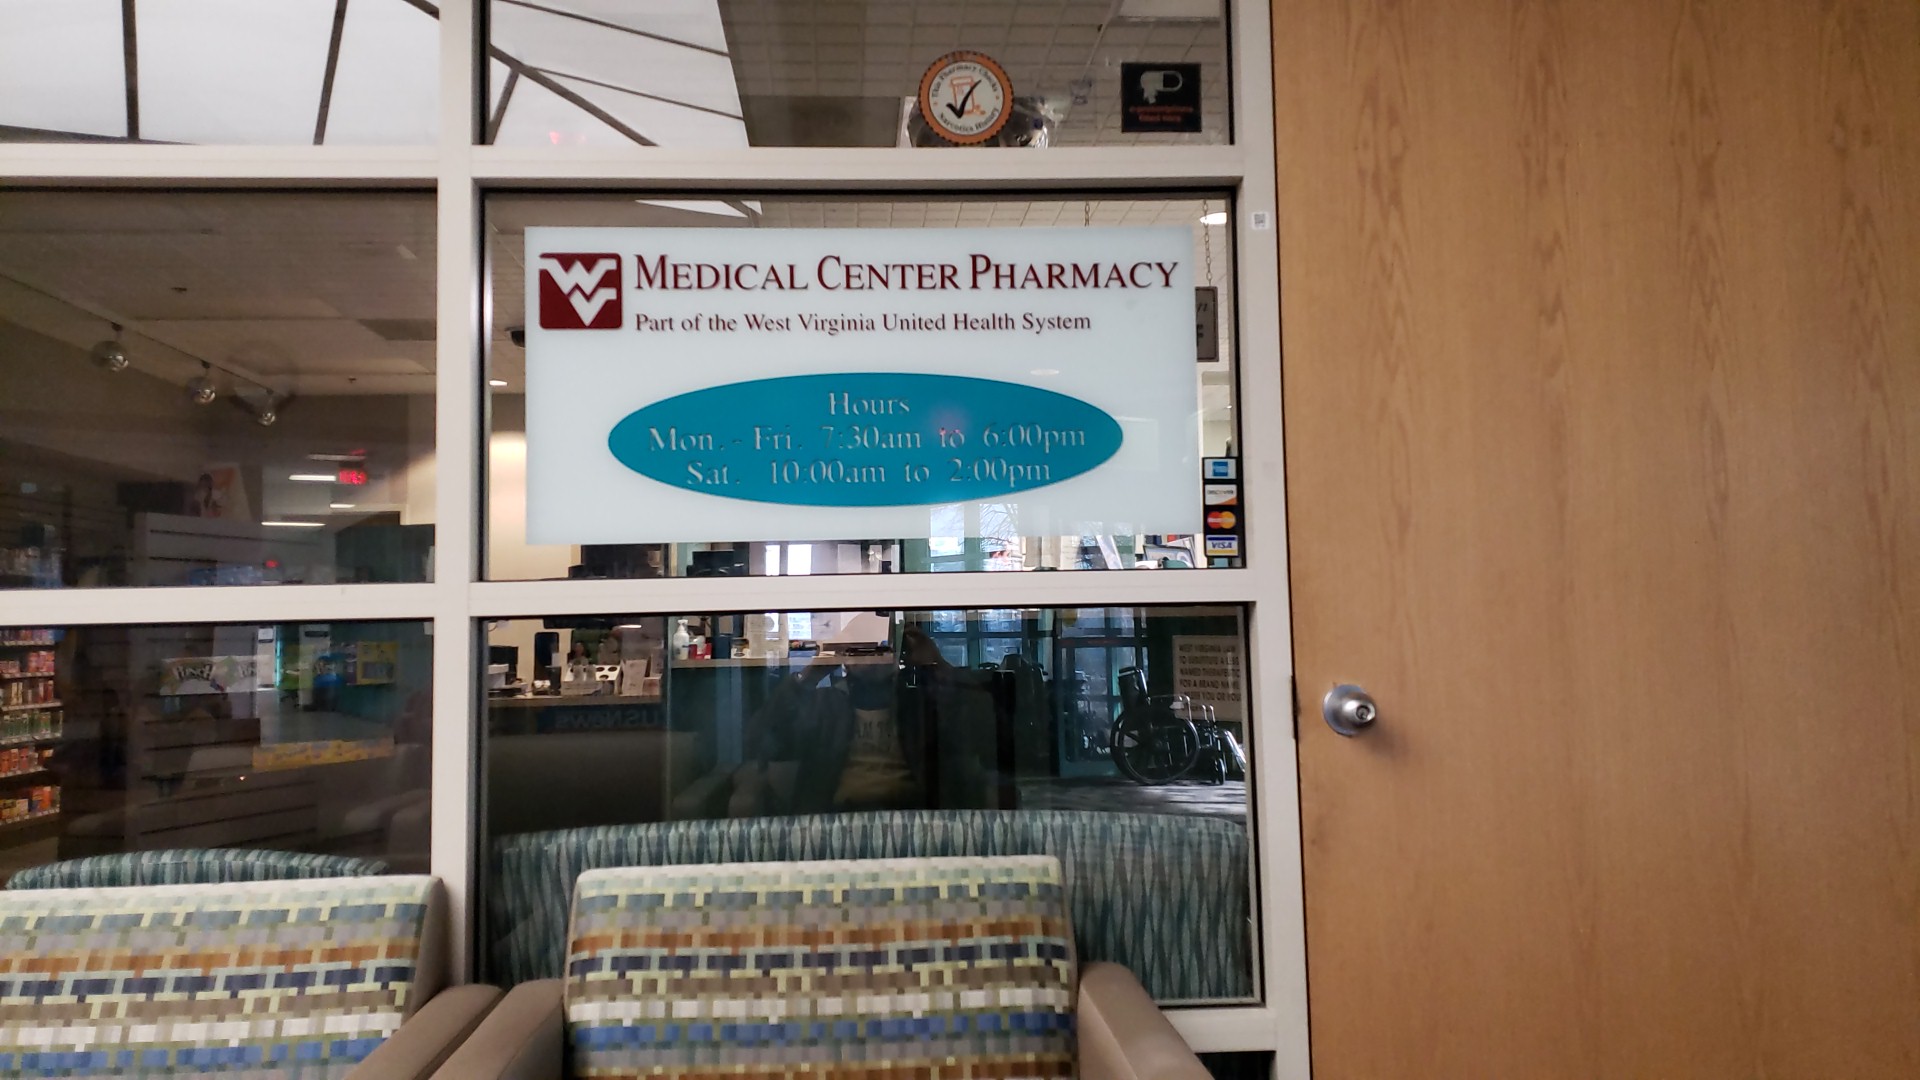 WVU Medical Center Pharmacy